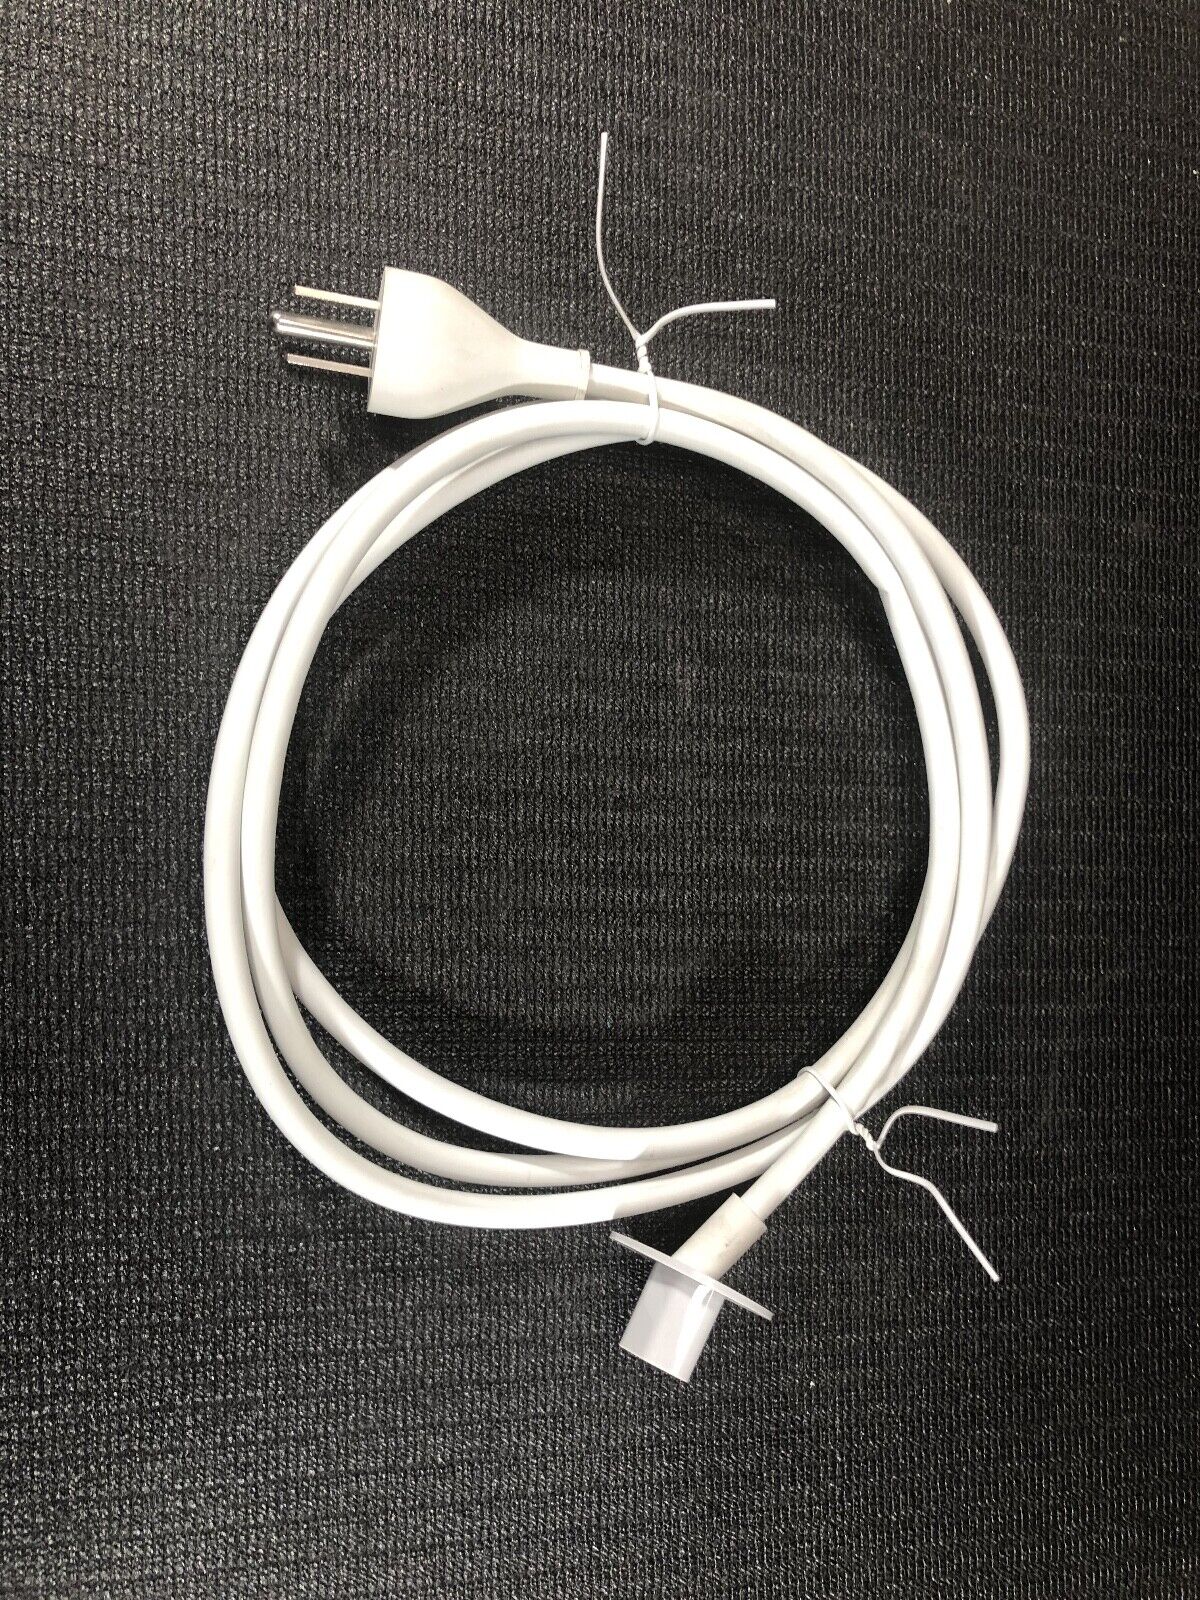 Apple iMac Power Cable/Cord A1418 27 A1419 A2115 A2116 2012 2013 2014 2015 2017